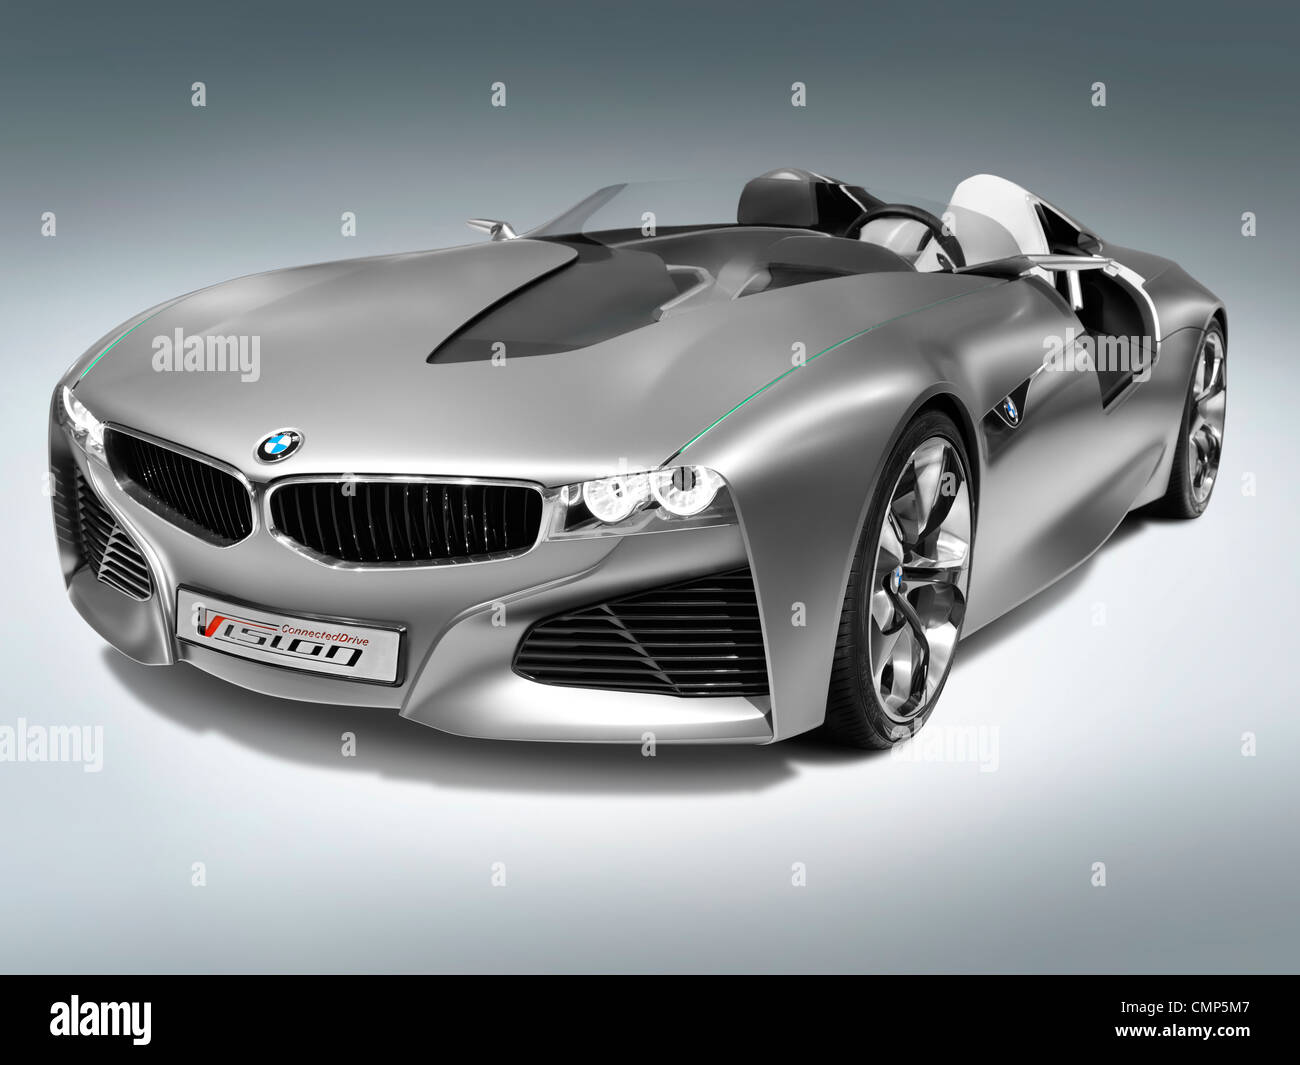 Lizenz und Drucke bei MaximImages.com - BMW Luxusauto, Automobil Stock Foto. Stockfoto